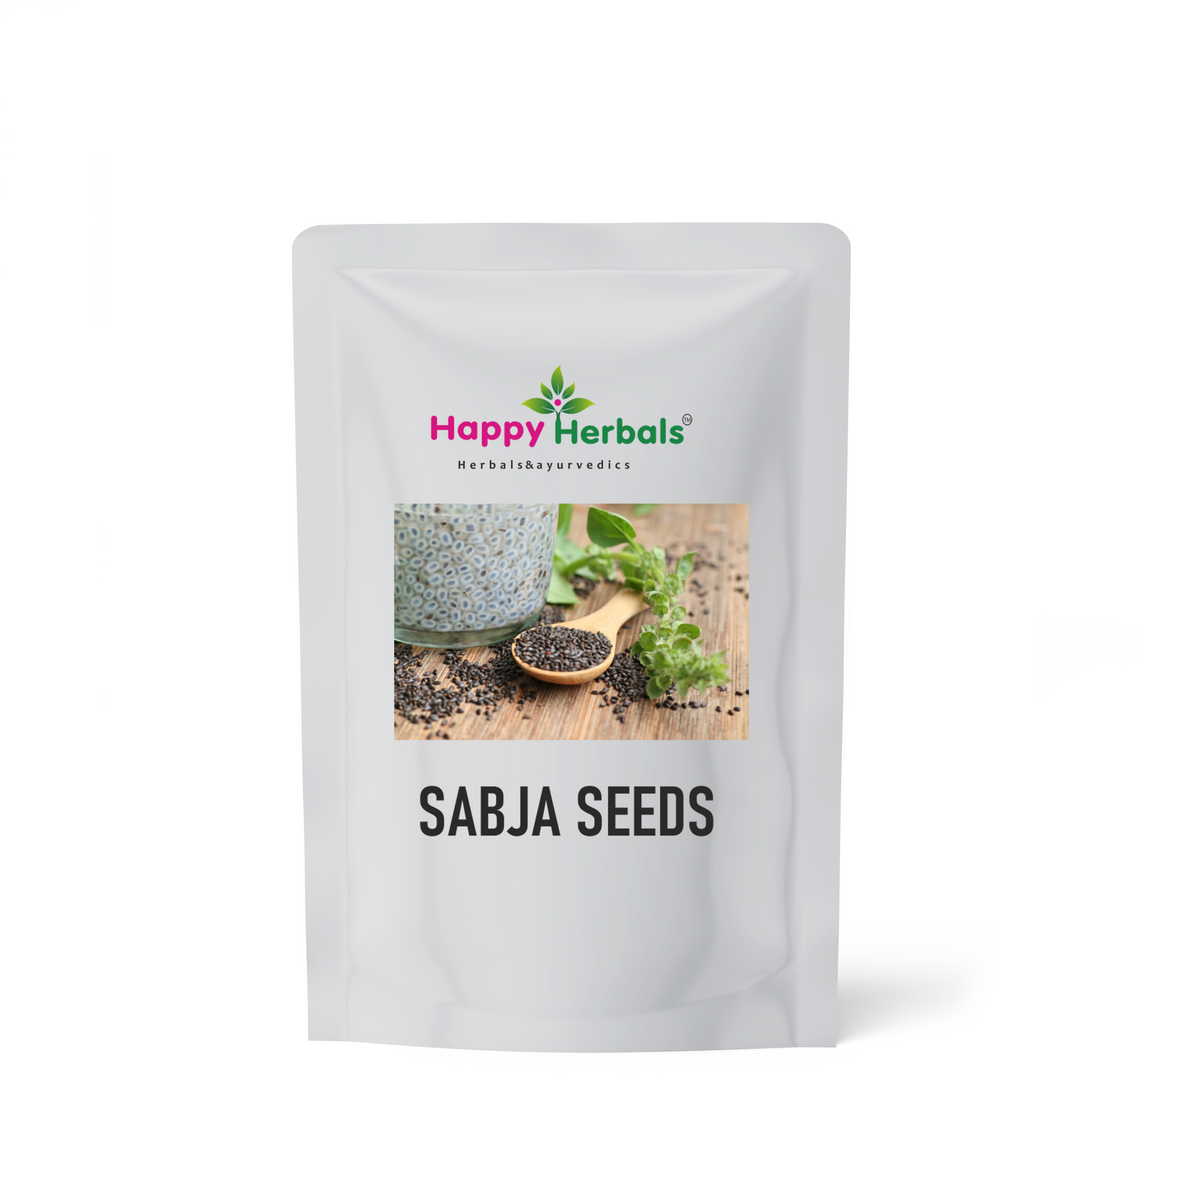 Sabja Seeds